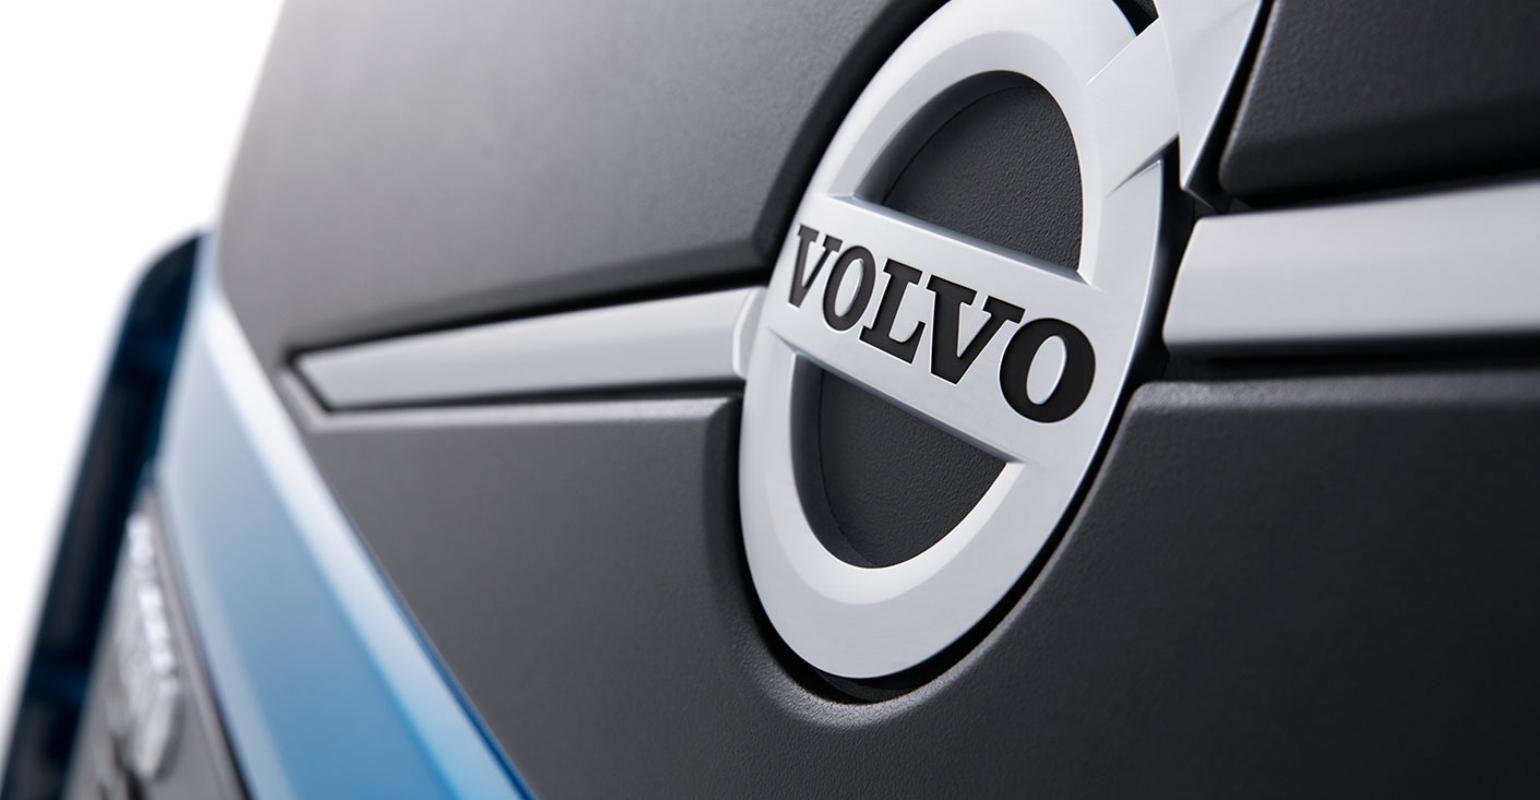 Volvo Truck Logo - Volvo Trucks Warns of Faulty Emissions Part